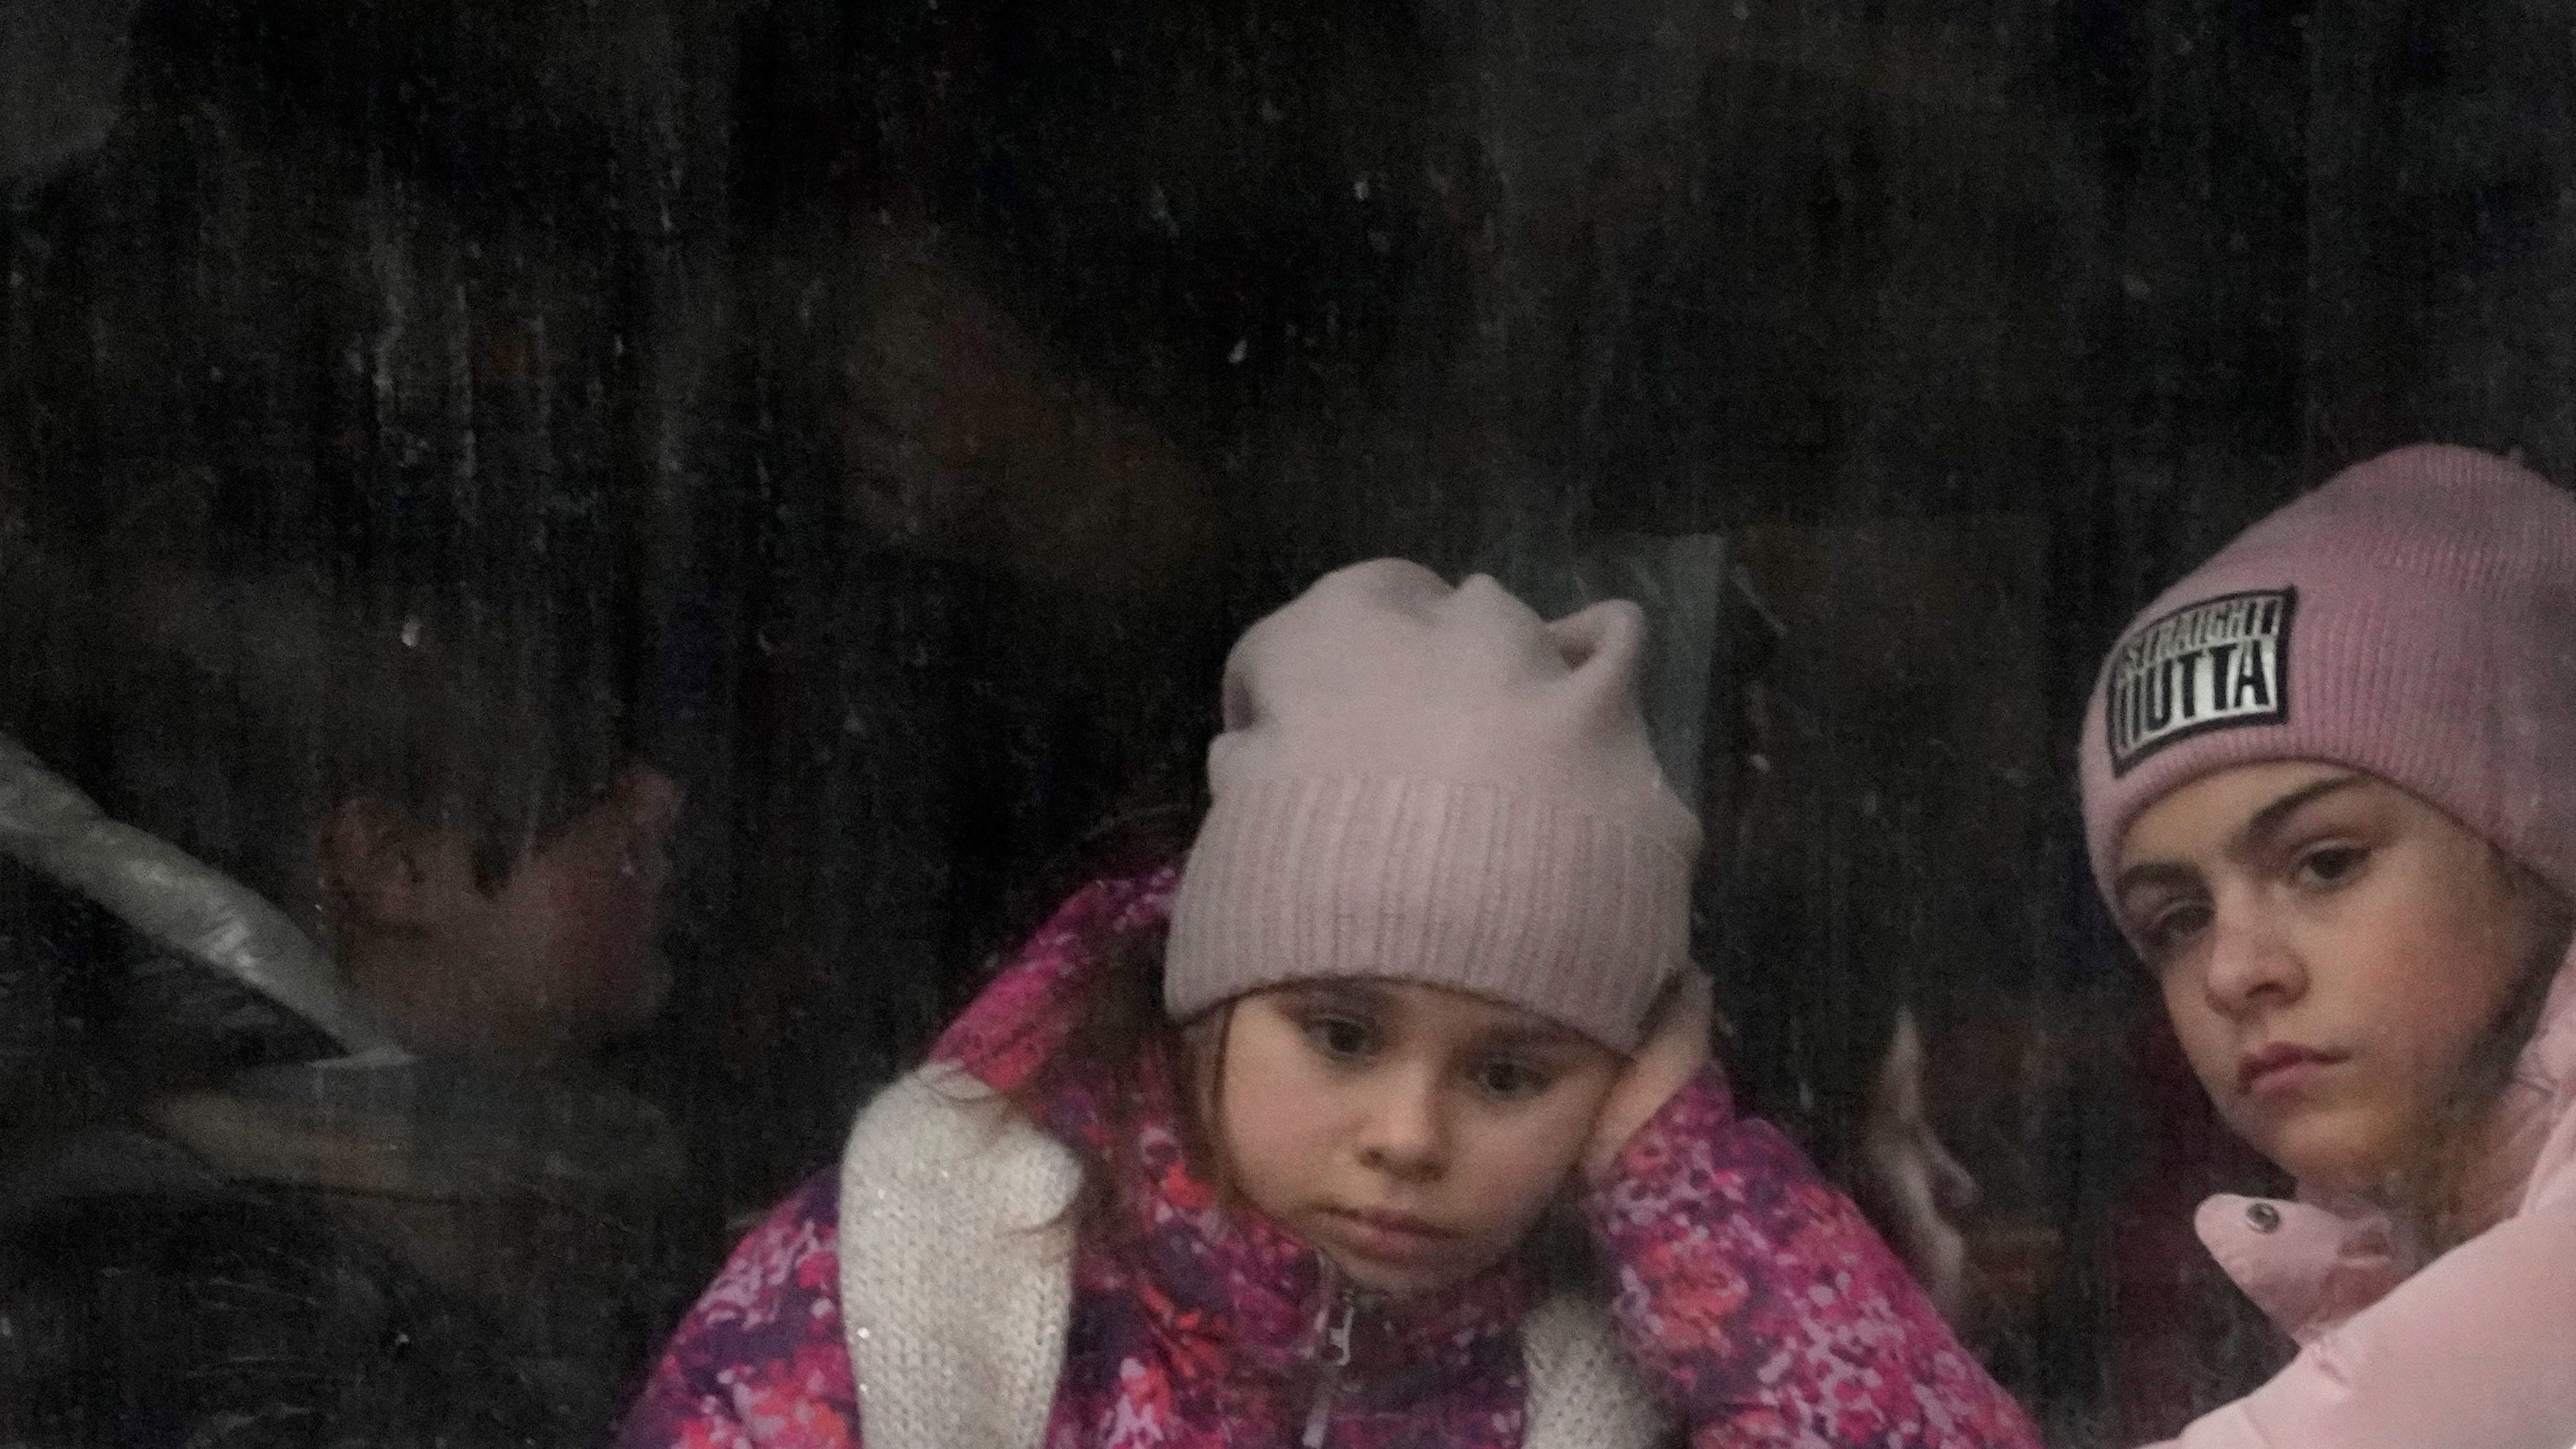 Ukrainian refugee children facing disorientation, exploitation during dangerous trek from home: Dr. Siegel